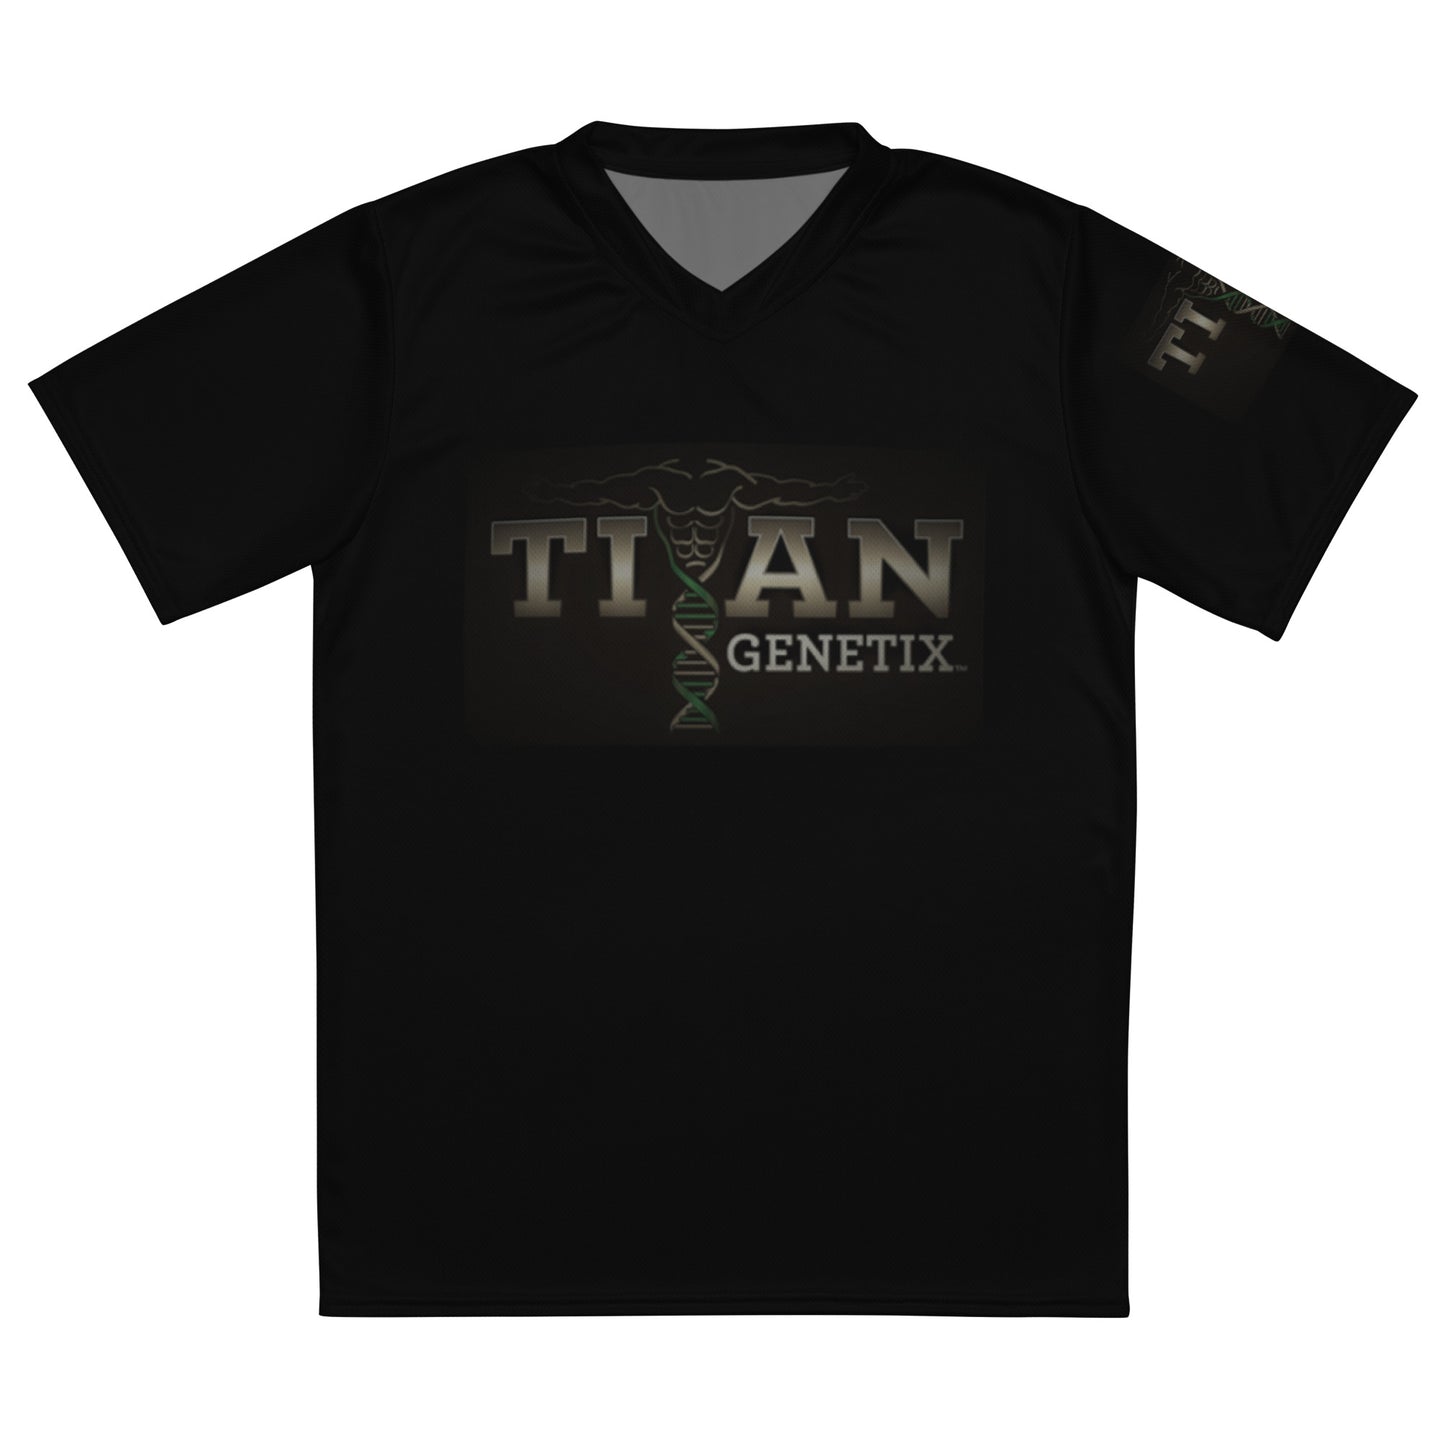 Titan Genetix Unisex Jersey - Ancient Gold Titan Genetix Logo